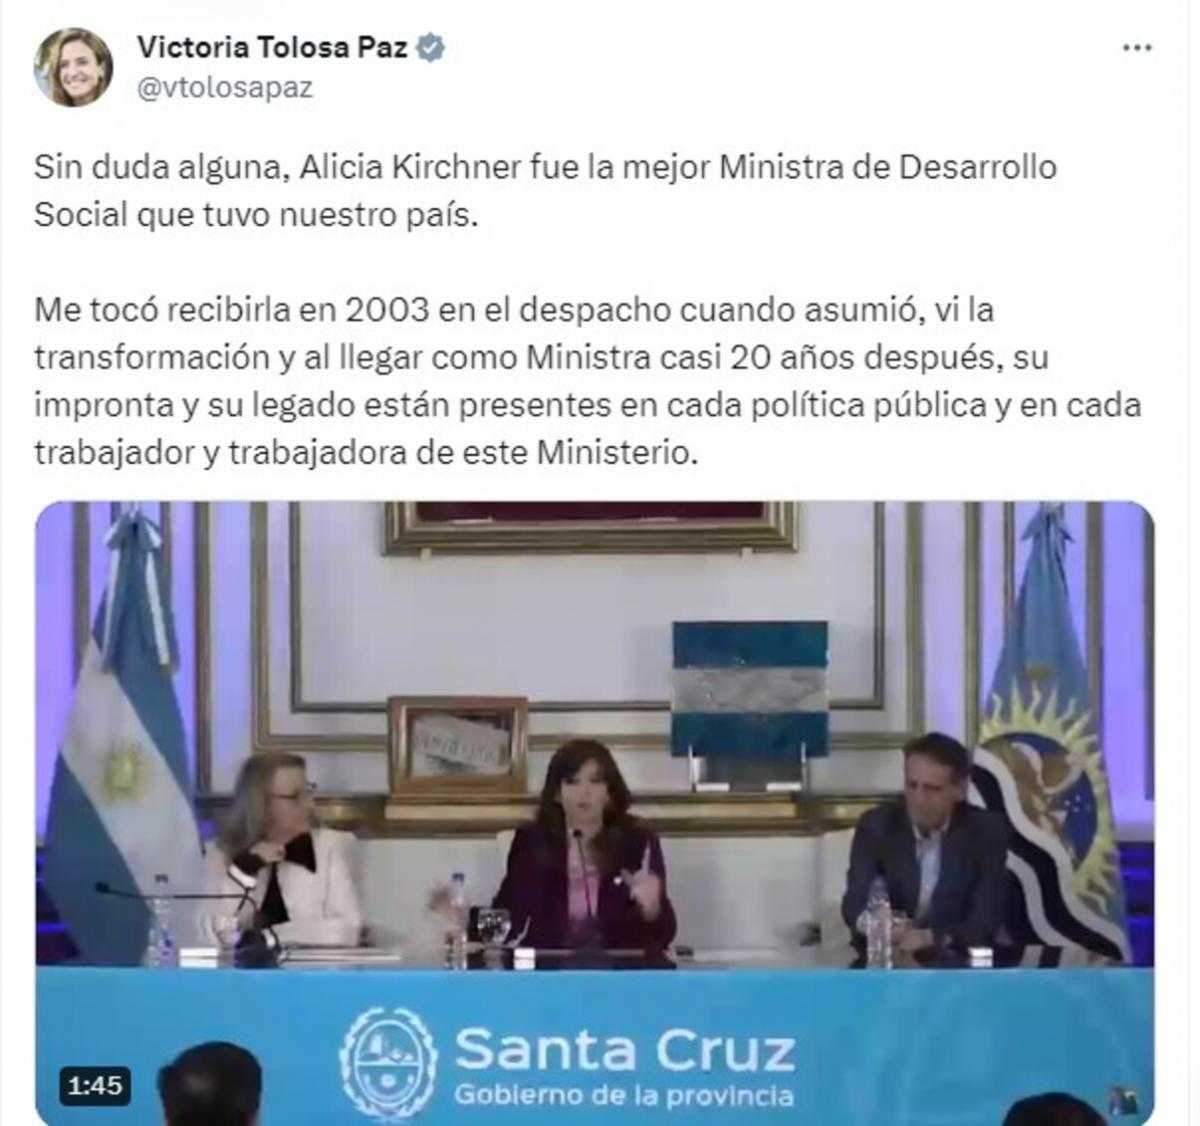 Cristina Kirchner dijo que Alicia Kirchner fue la mejor ministra de Desarrollo Social del país y Tolosa Paz respondió